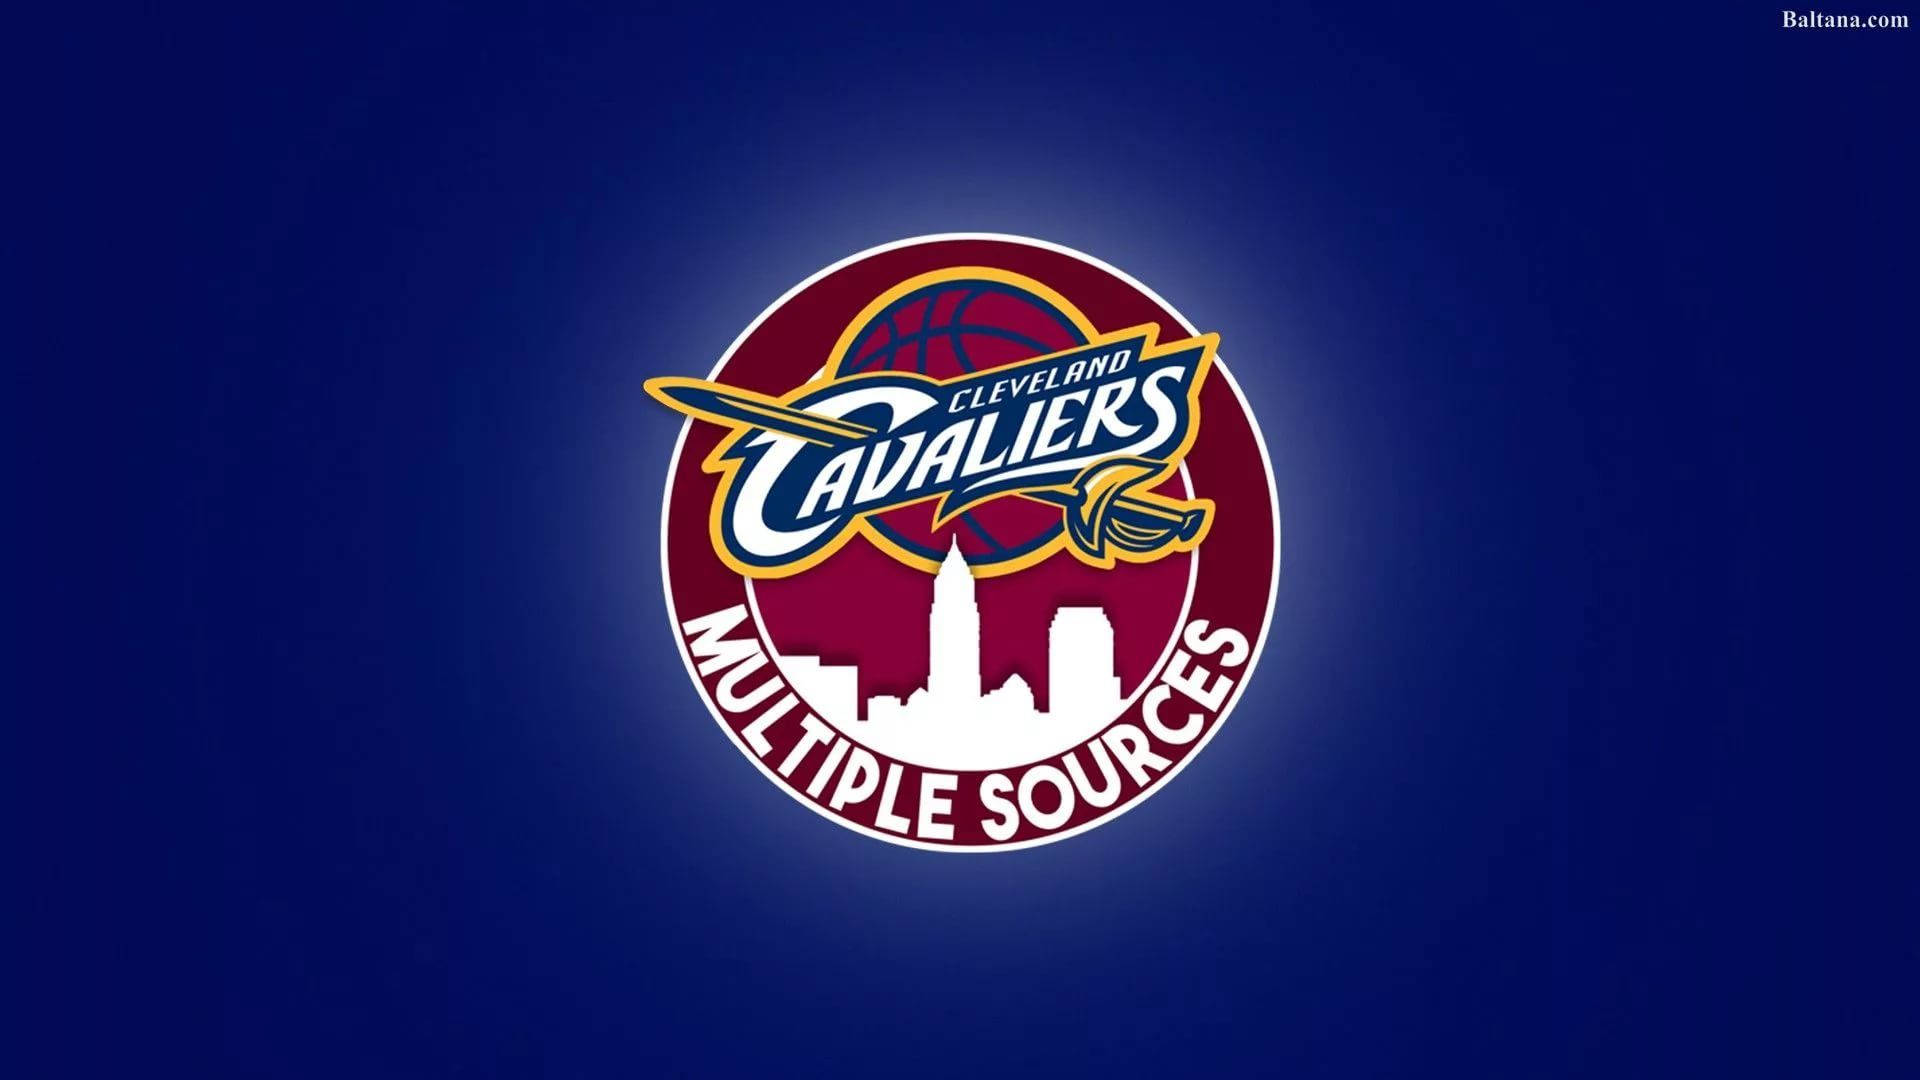 Cleveland Cavaliers City-logo Wallpaper